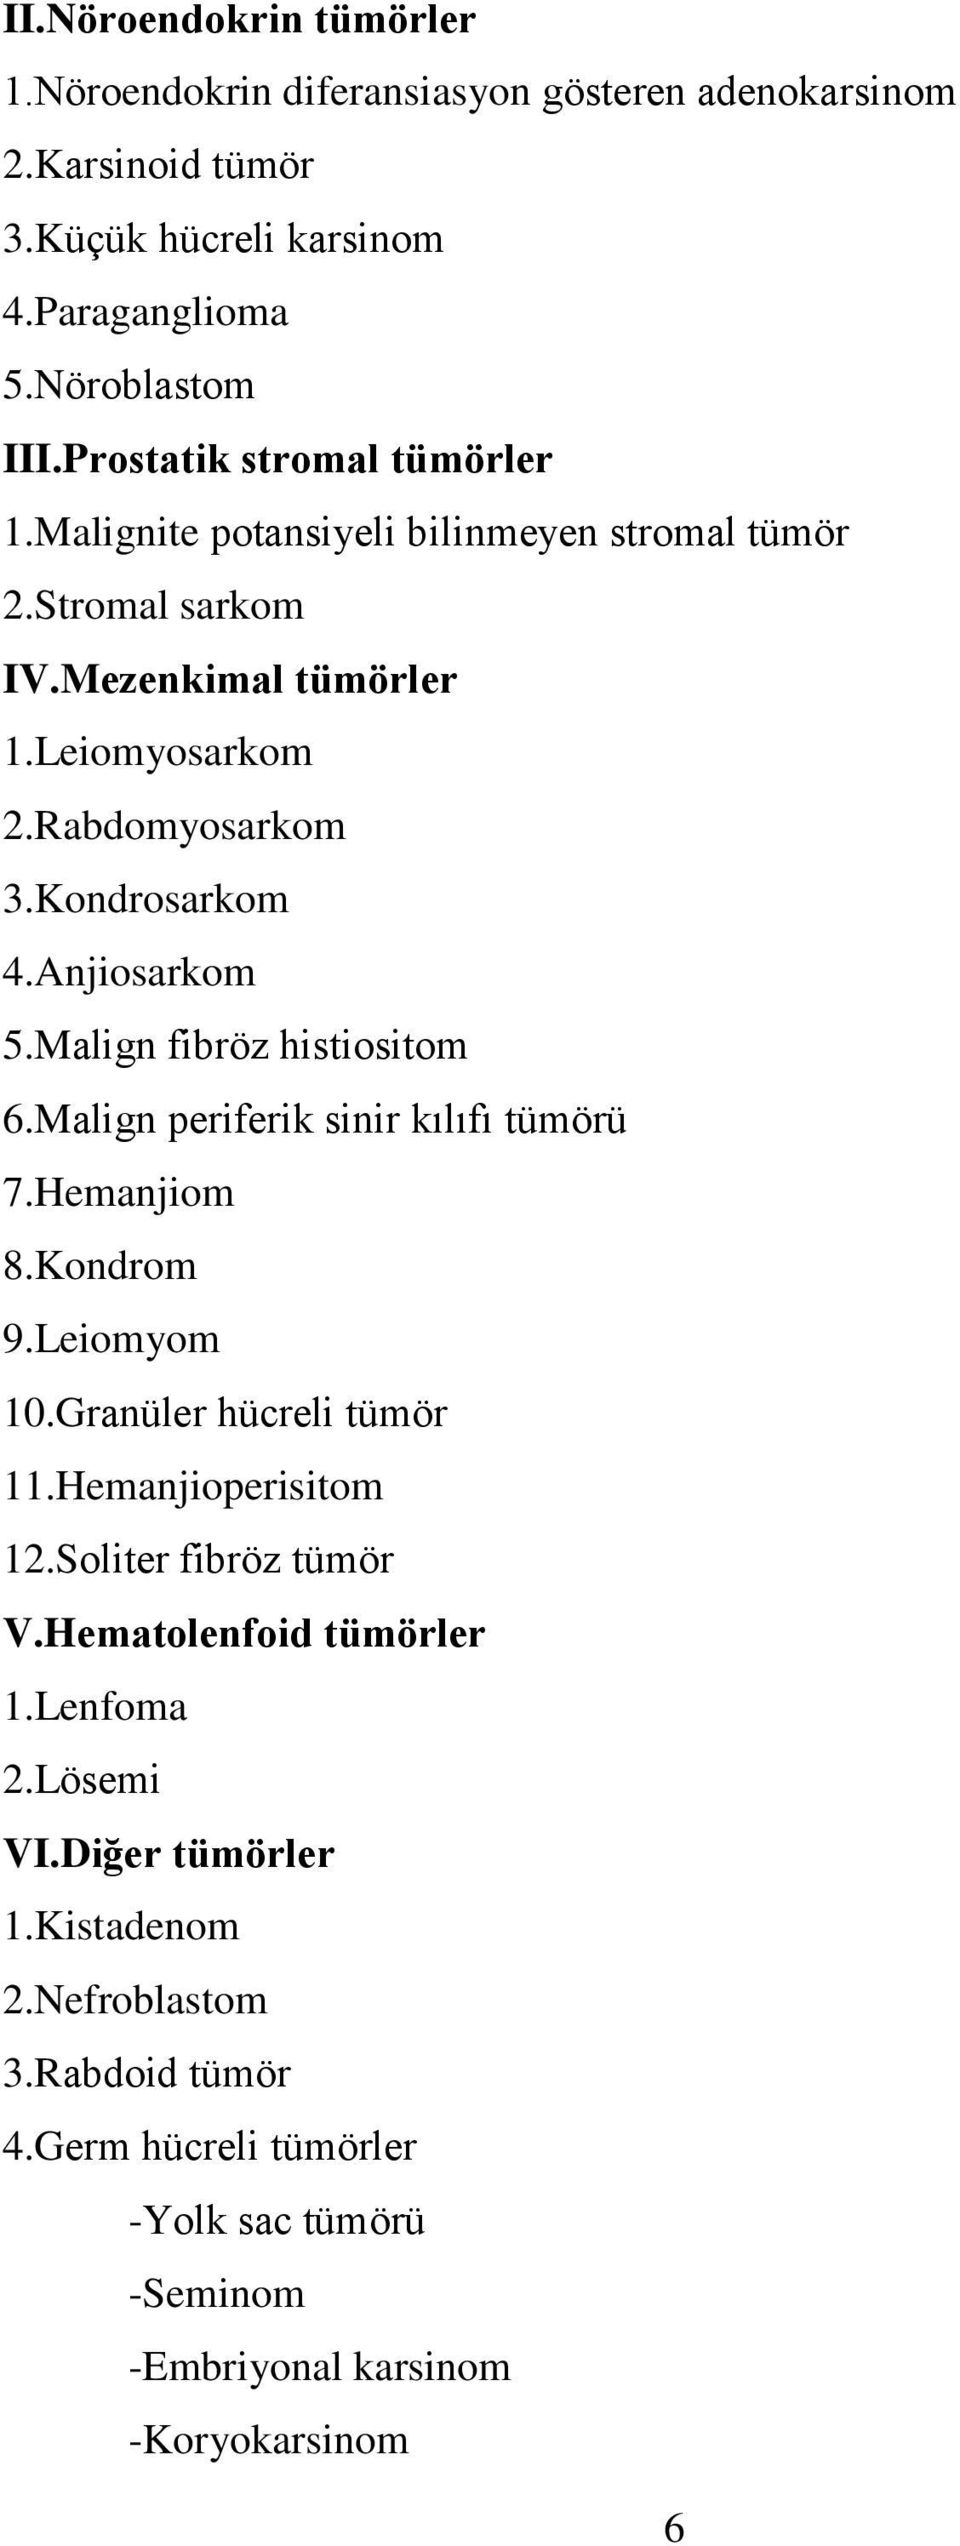 Anjiosarkom 5.Malign fibröz histiositom 6.Malign periferik sinir kılıfı tümörü 7.Hemanjiom 8.Kondrom 9.Leiomyom 10.Granüler hücreli tümör 11.Hemanjioperisitom 12.